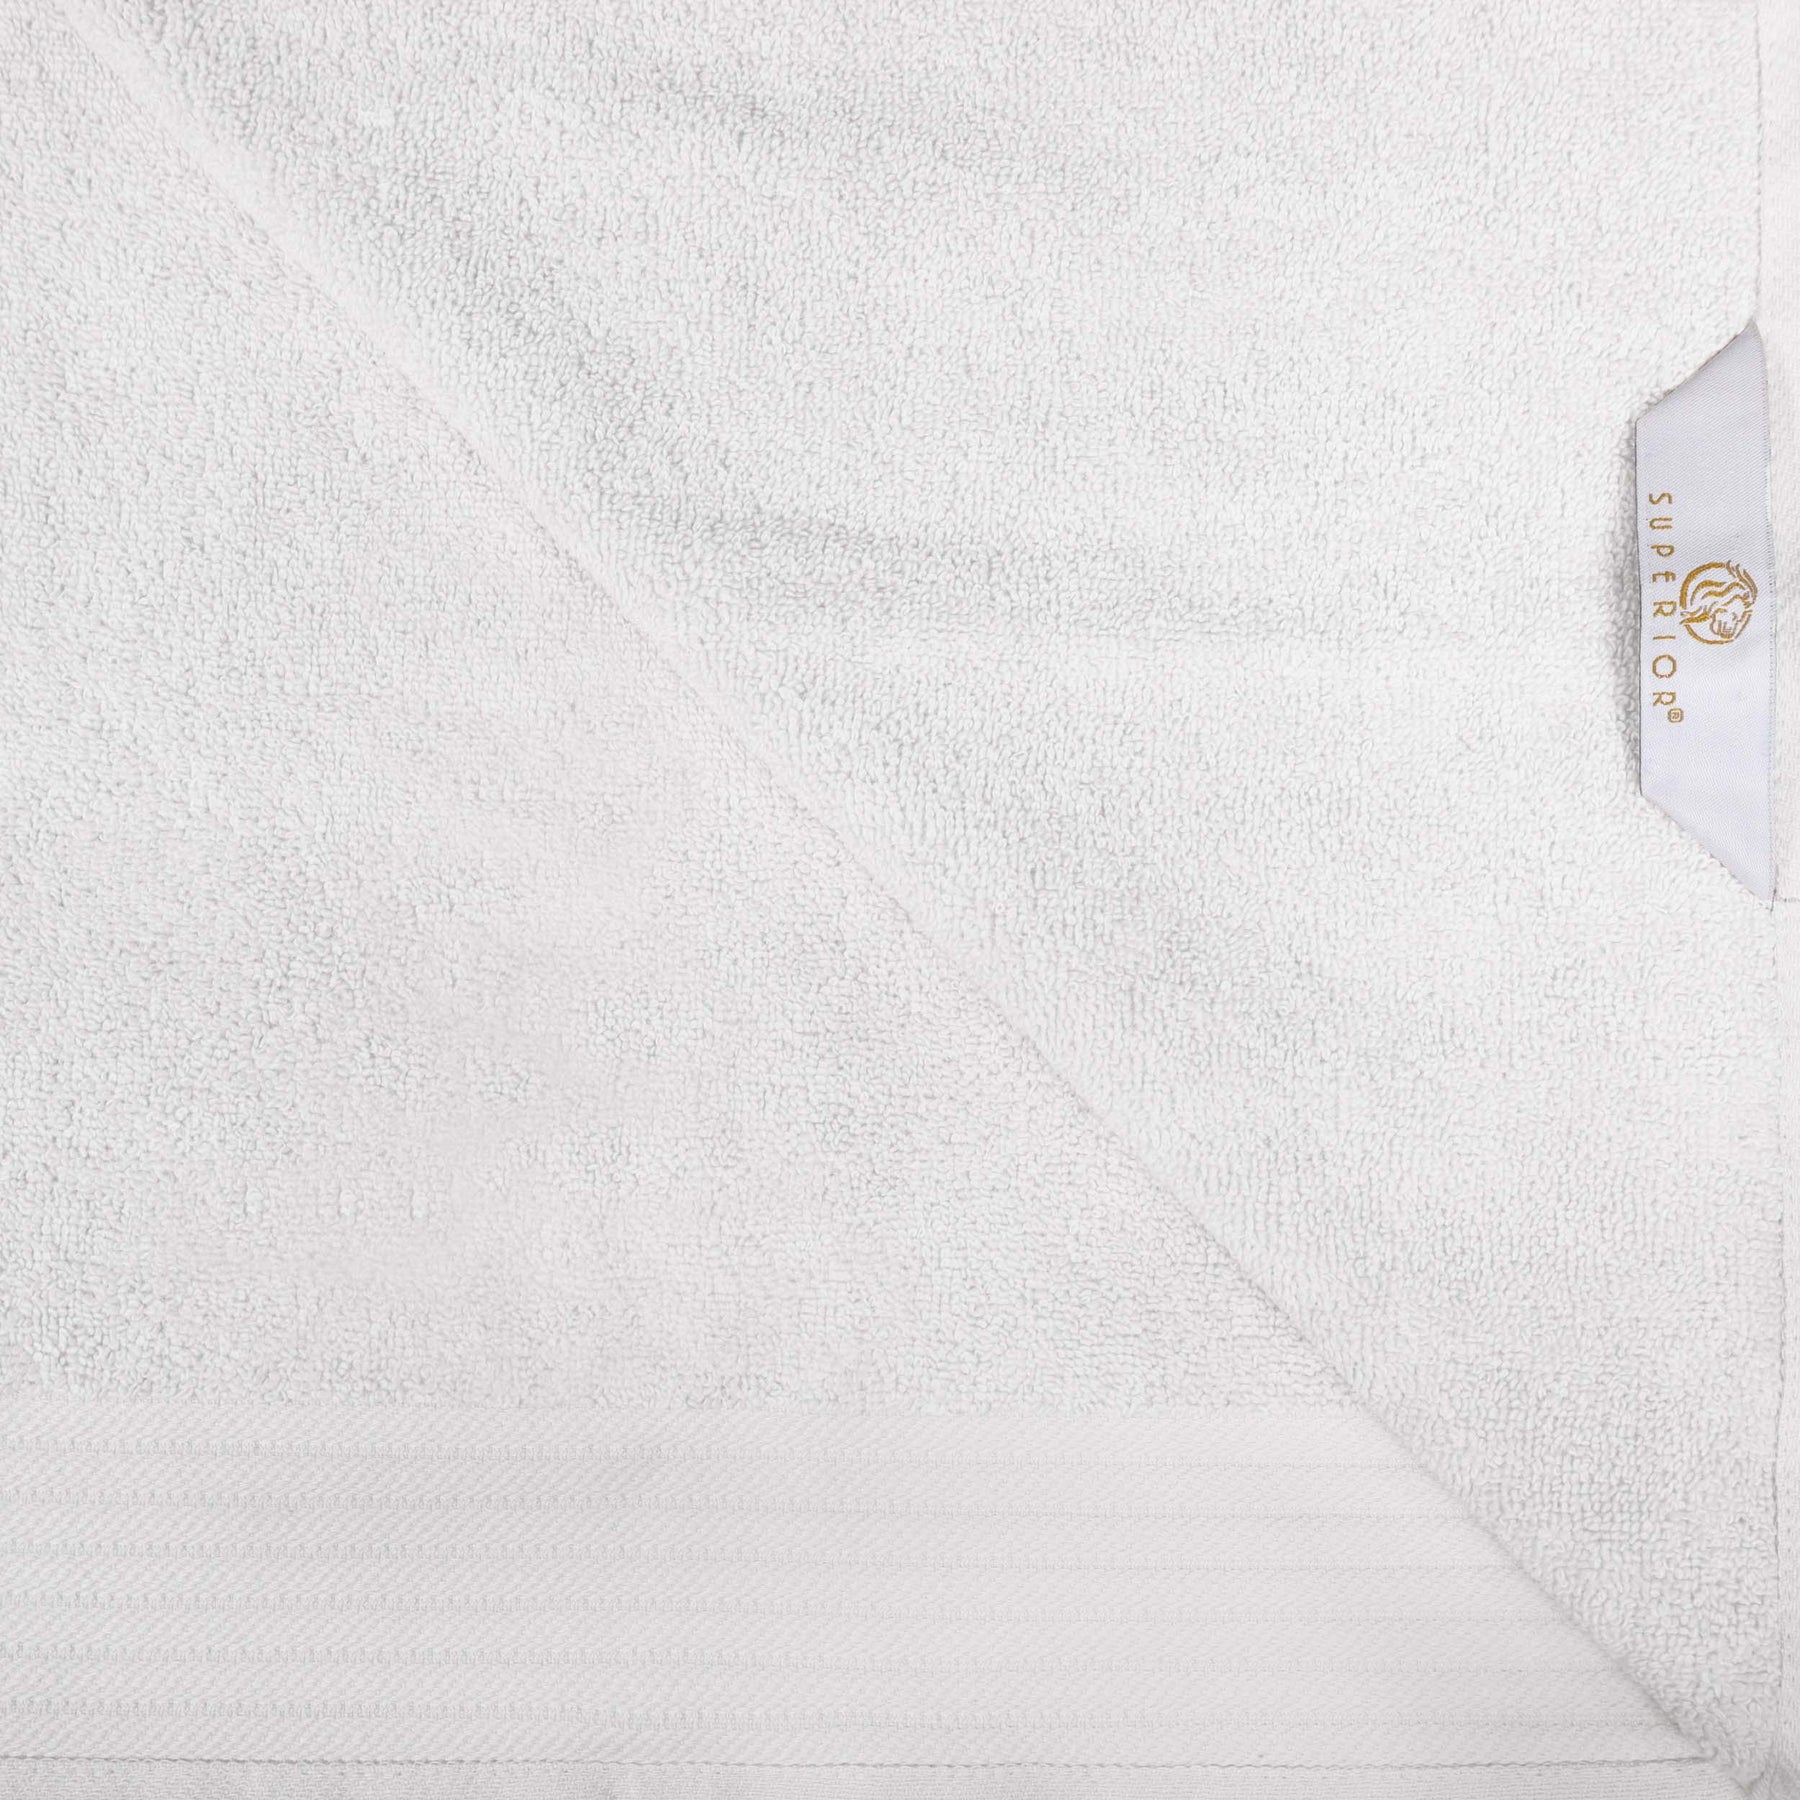 Premium Turkish Cotton Jacquard Herringbone and Solid 6-Piece Hand Towel Set - White